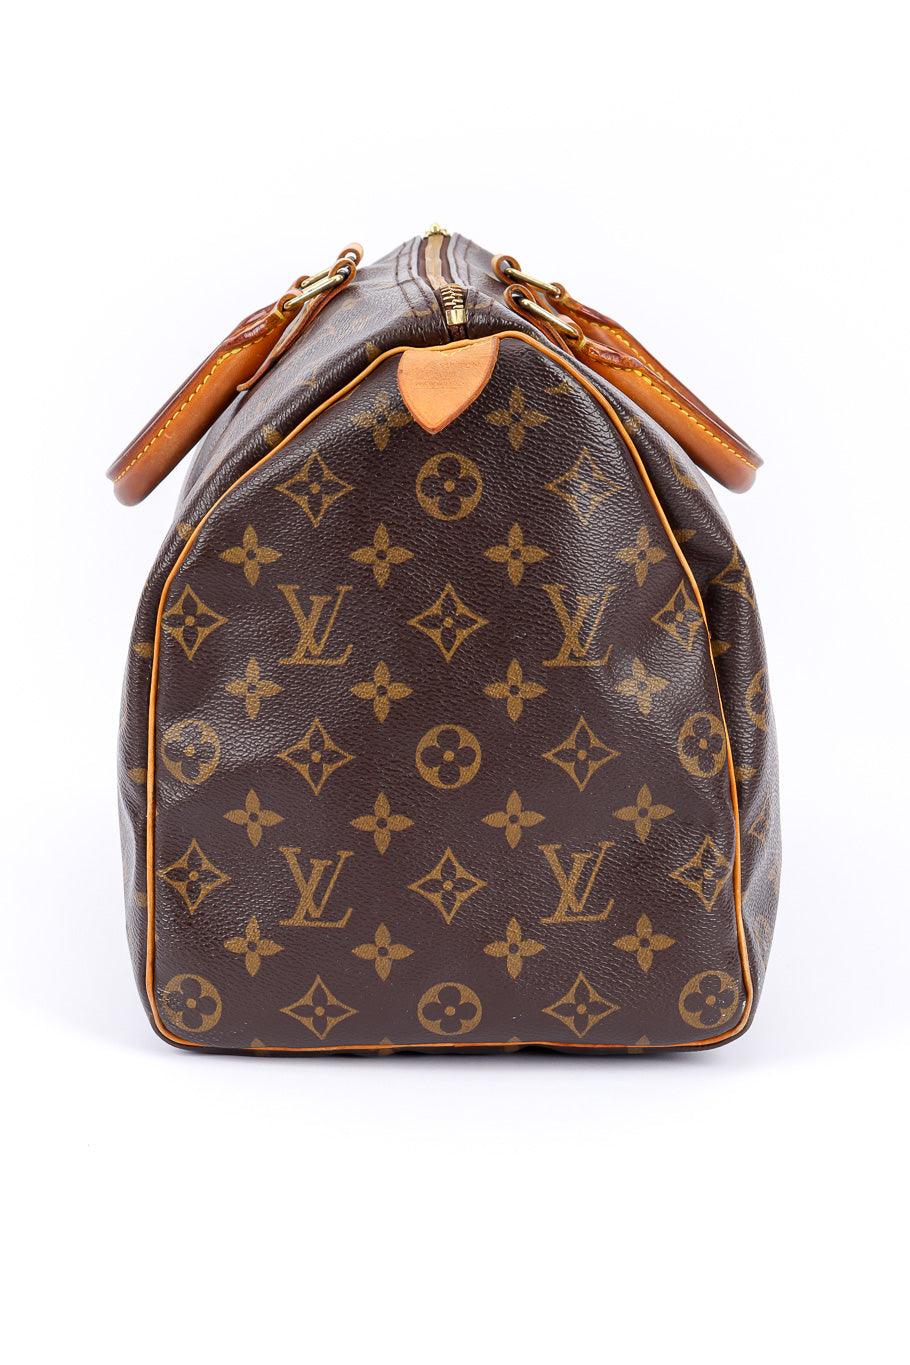 Vintage Louis Vuitton Classic Monogram Speedy 35 Bag side view @Recessla